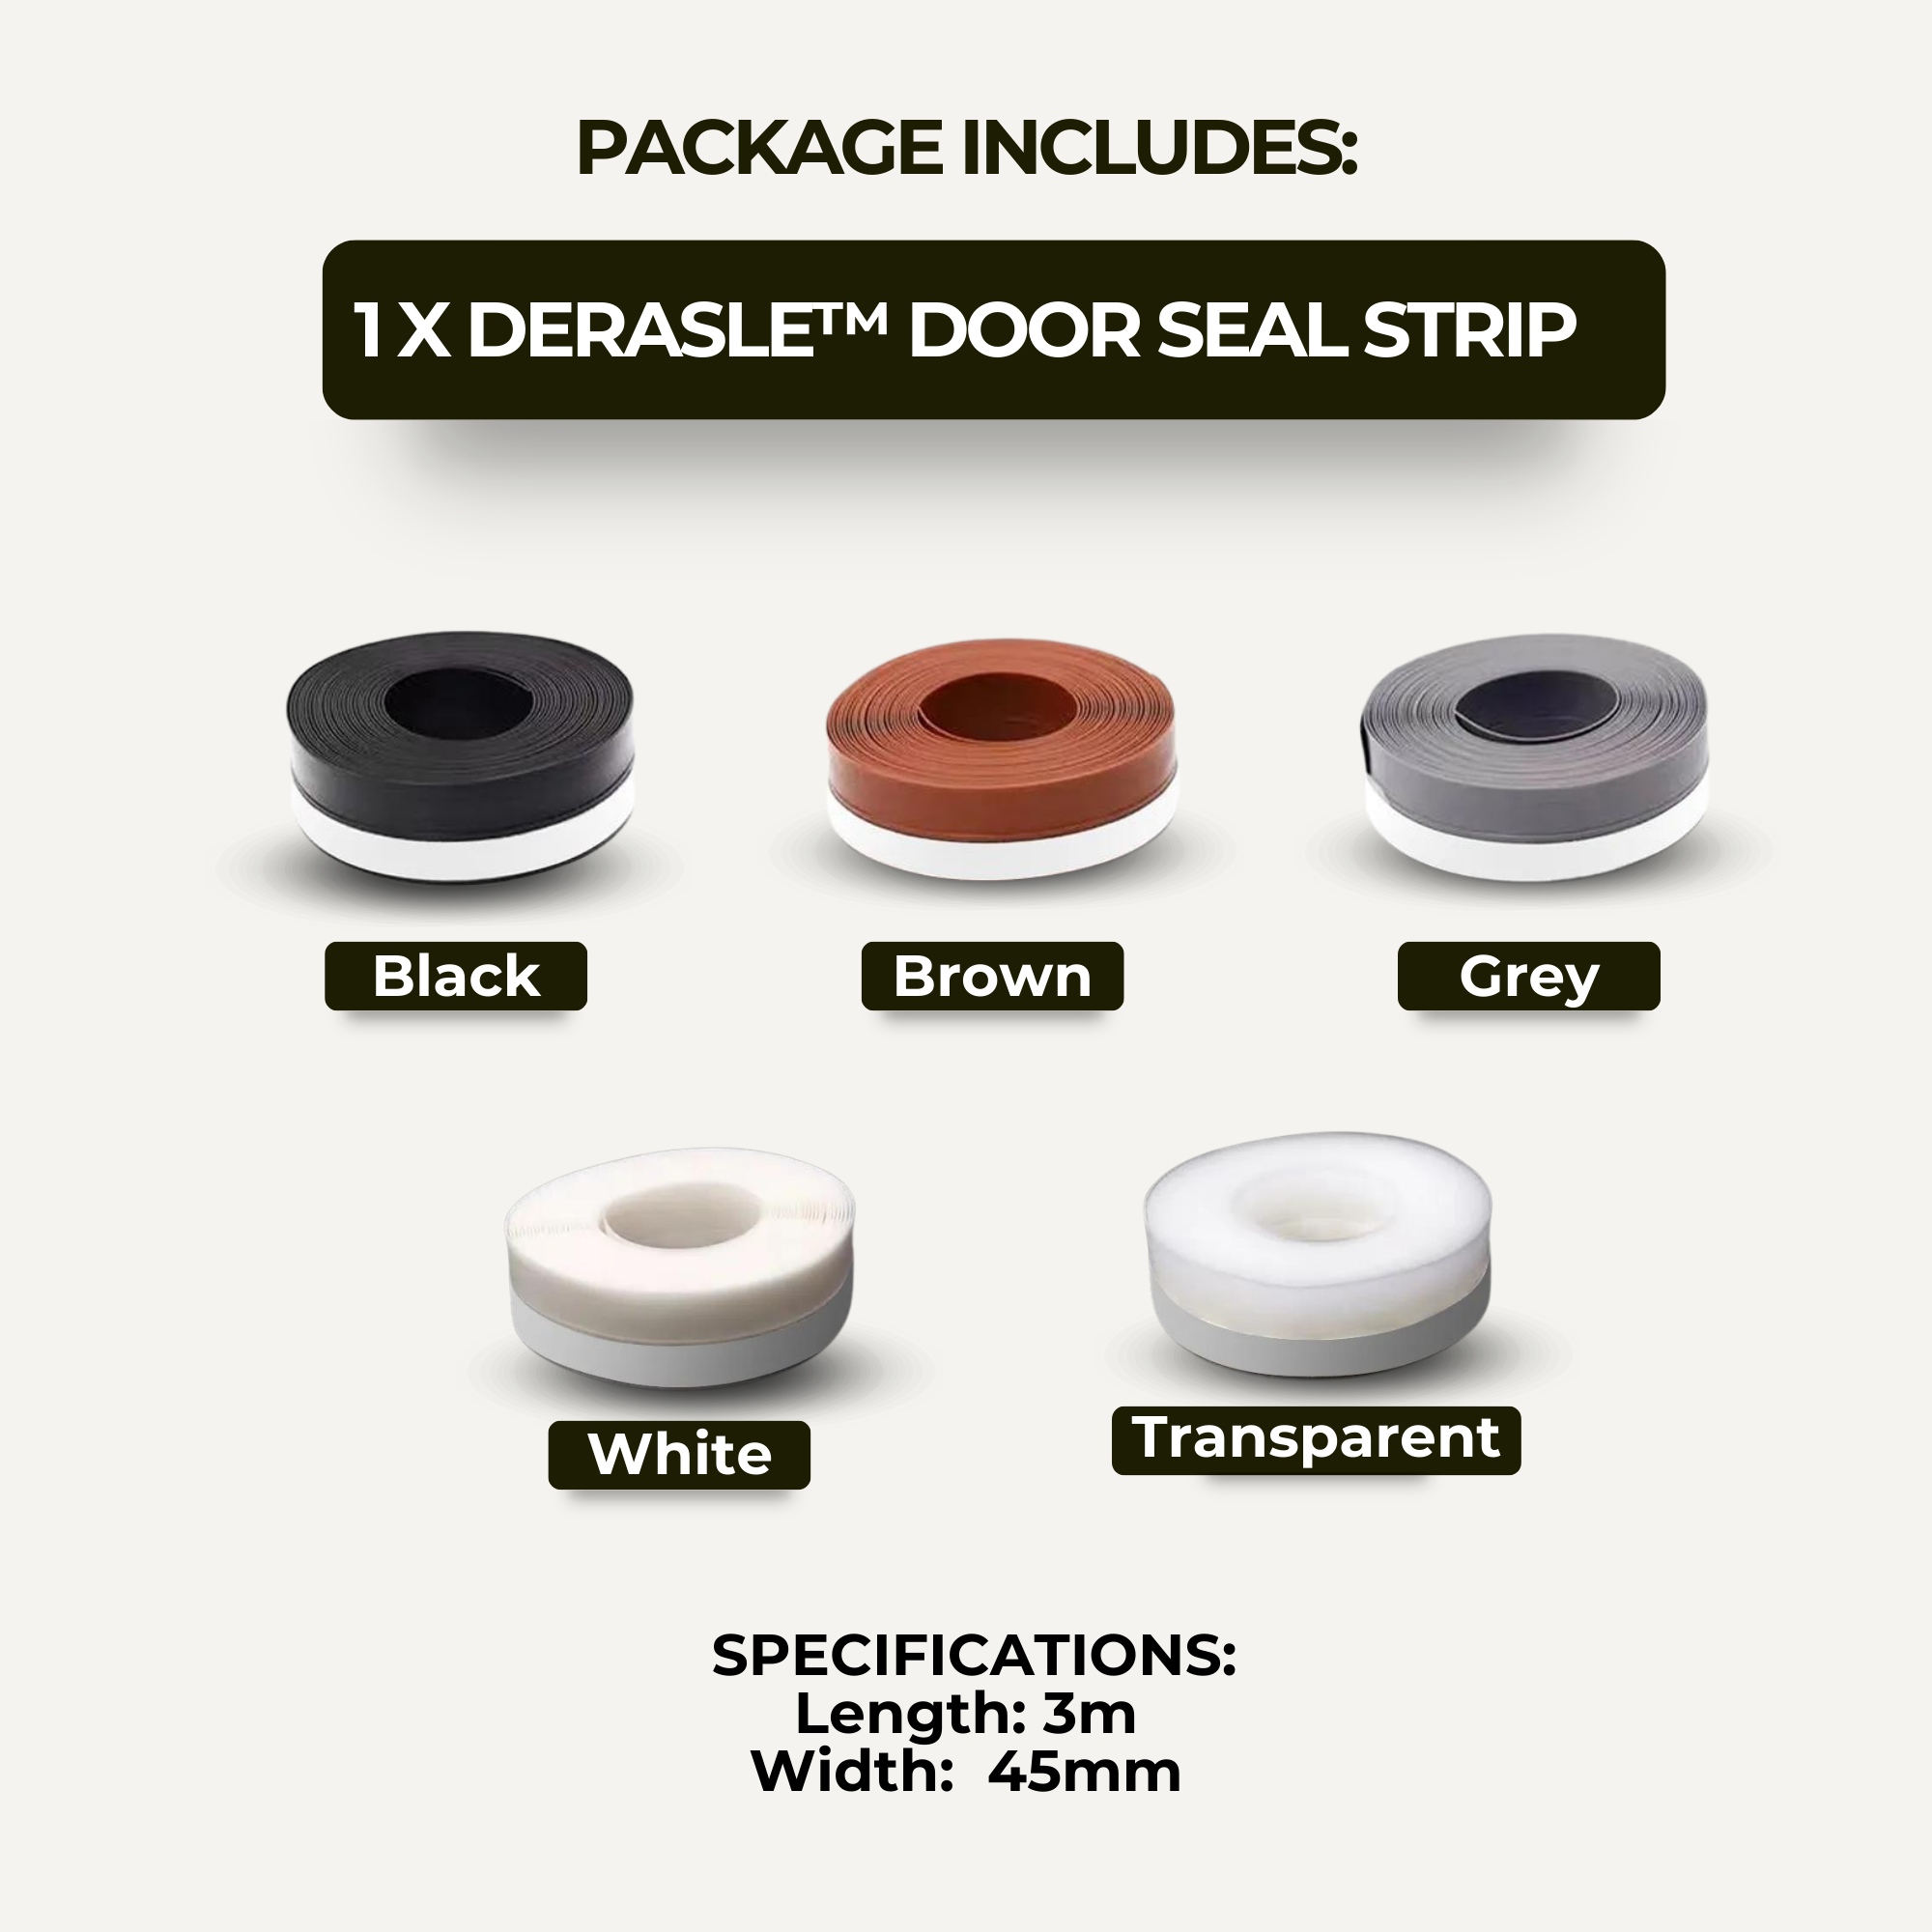 Derasle™ Door Seal Strip - 9.8 Feet Length Tape